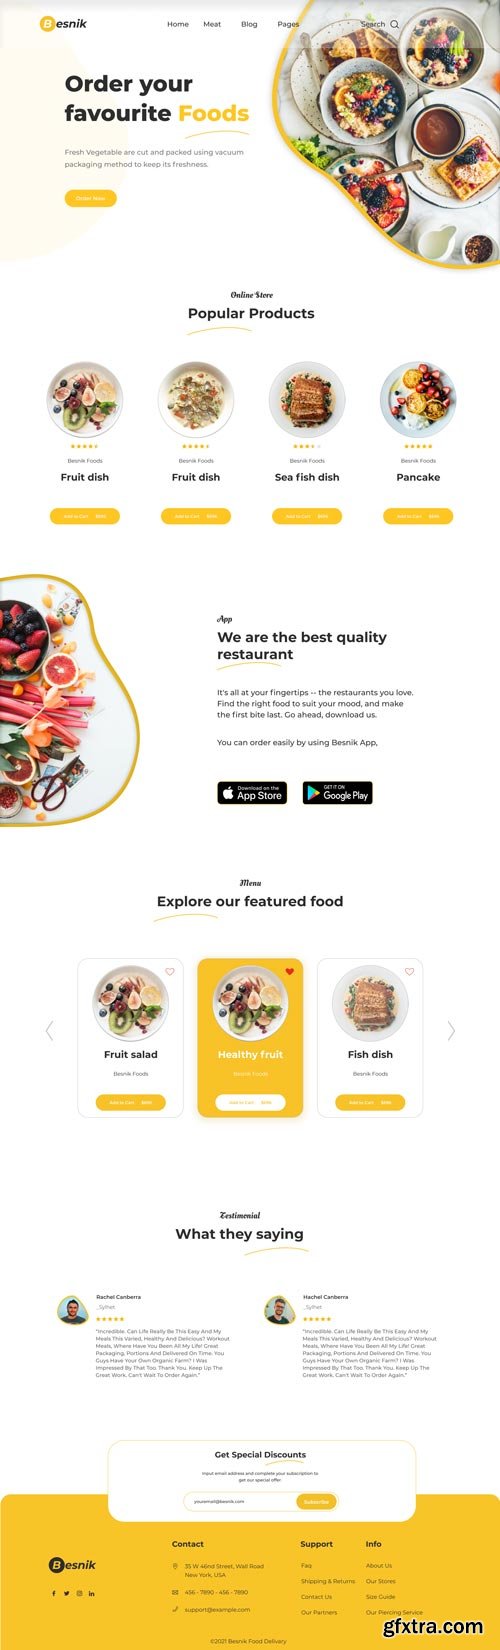 UiHut - Best Food Delivery Landing Page - 8091